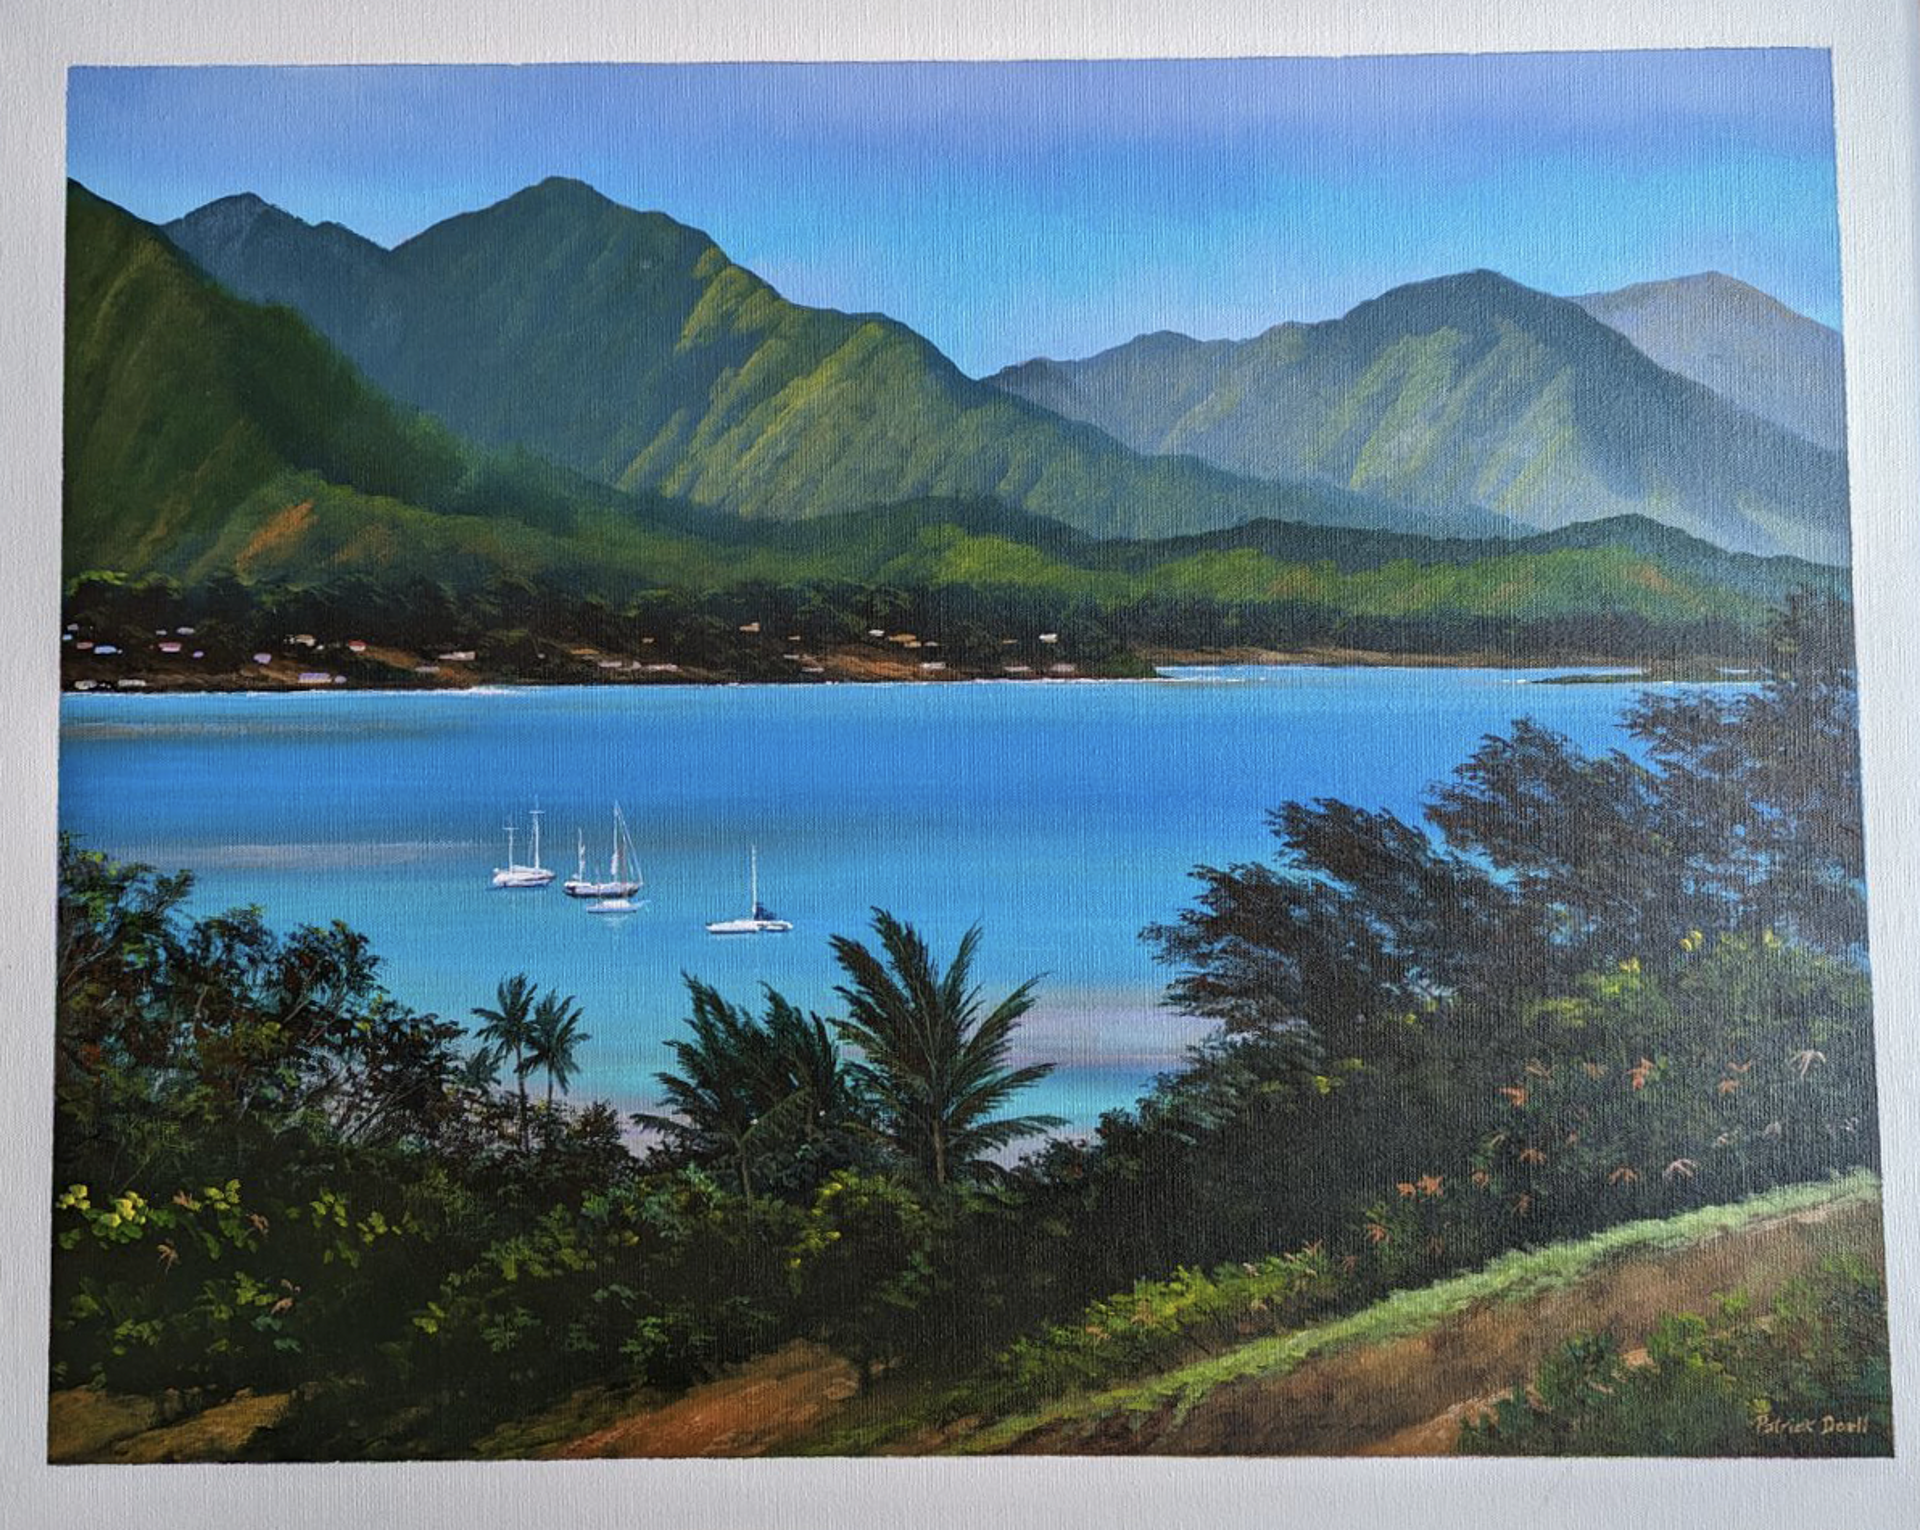 Kāneʻohe Bay by Patrick Doell